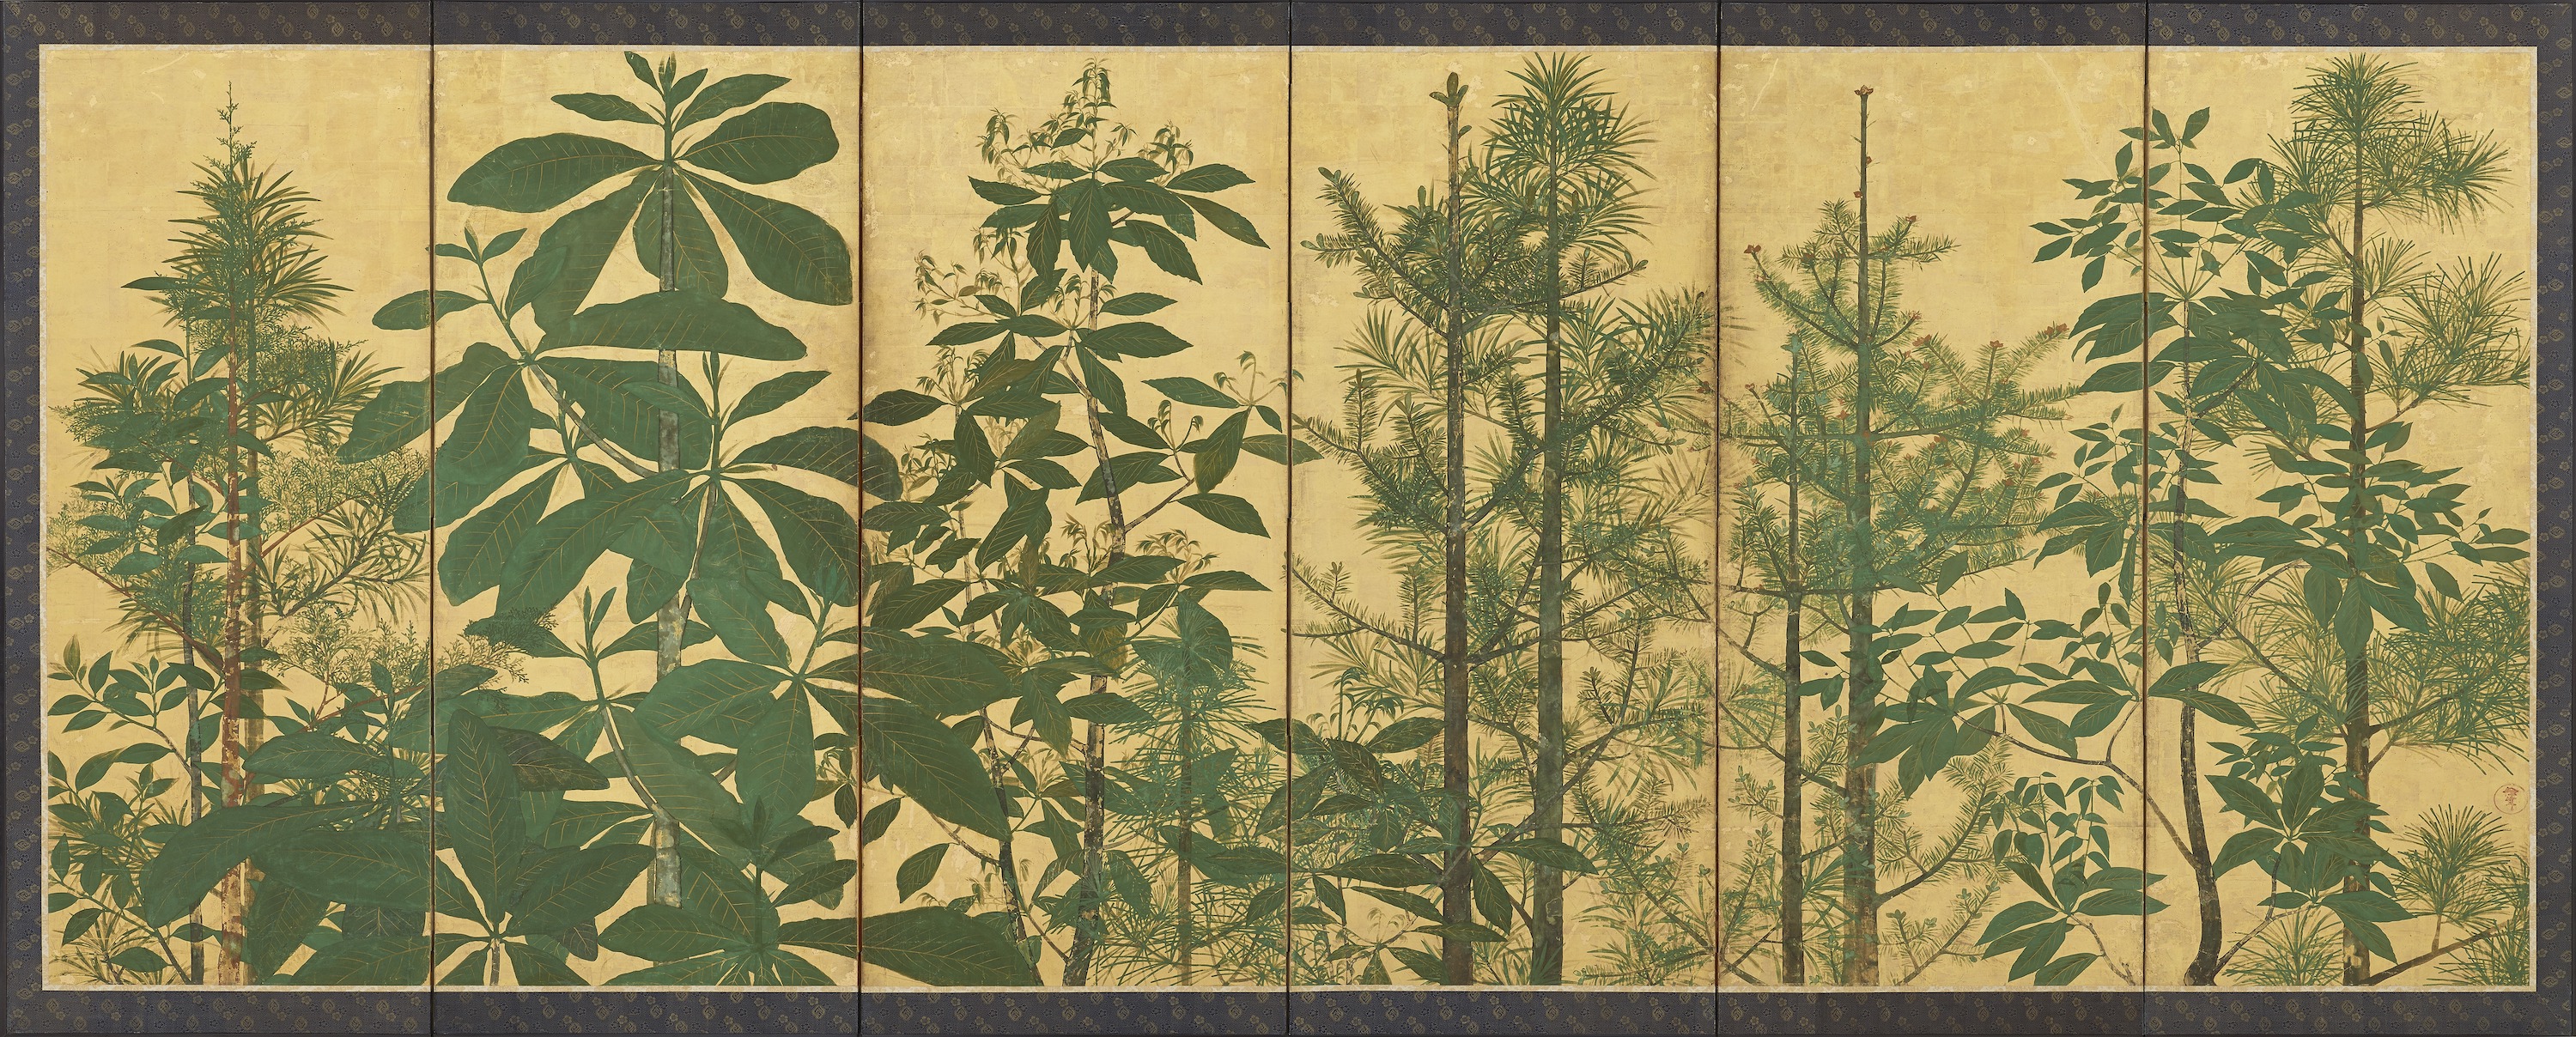 Ağaçlar by I-nen Seal Ustası  - Edo period, mid 17th century - 154 x 357.8 cm 